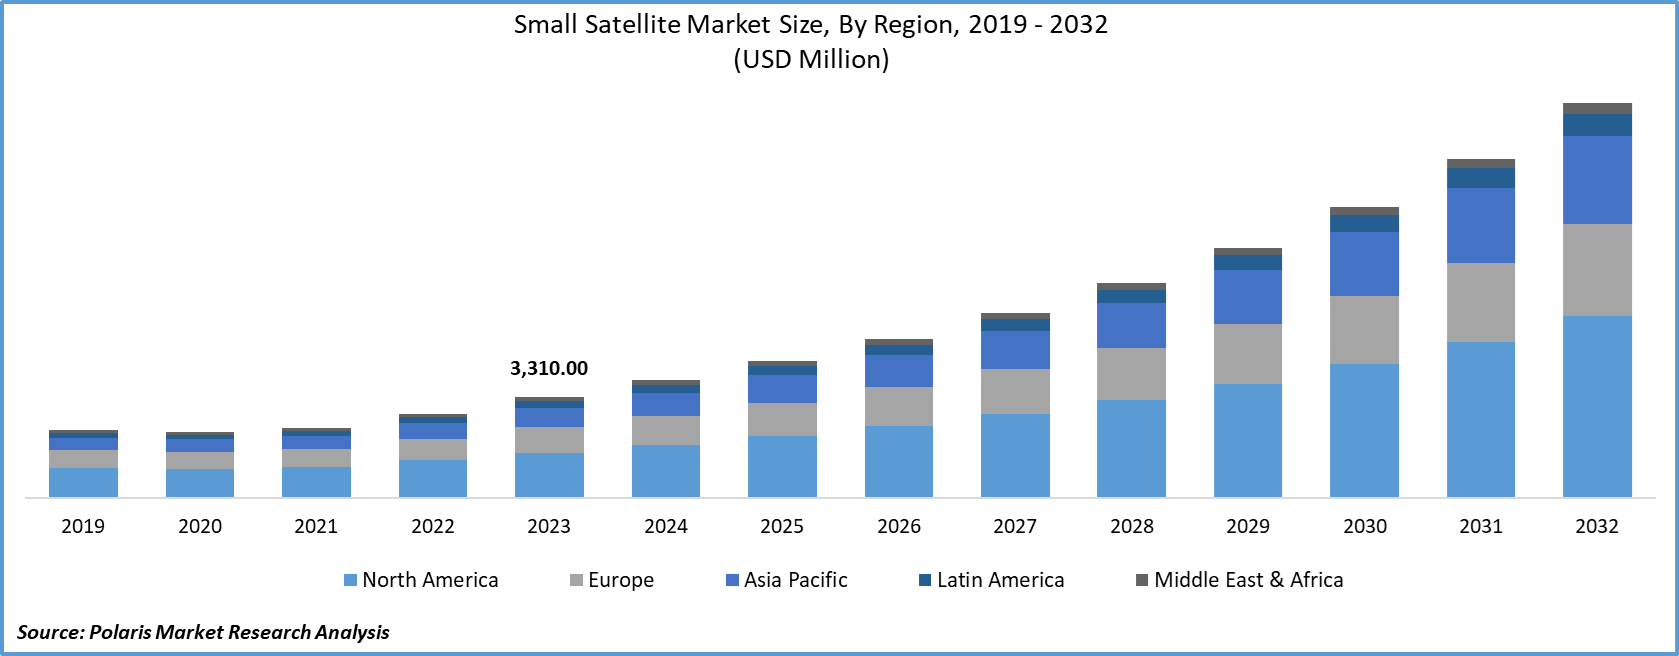 Small Satellite Market Size